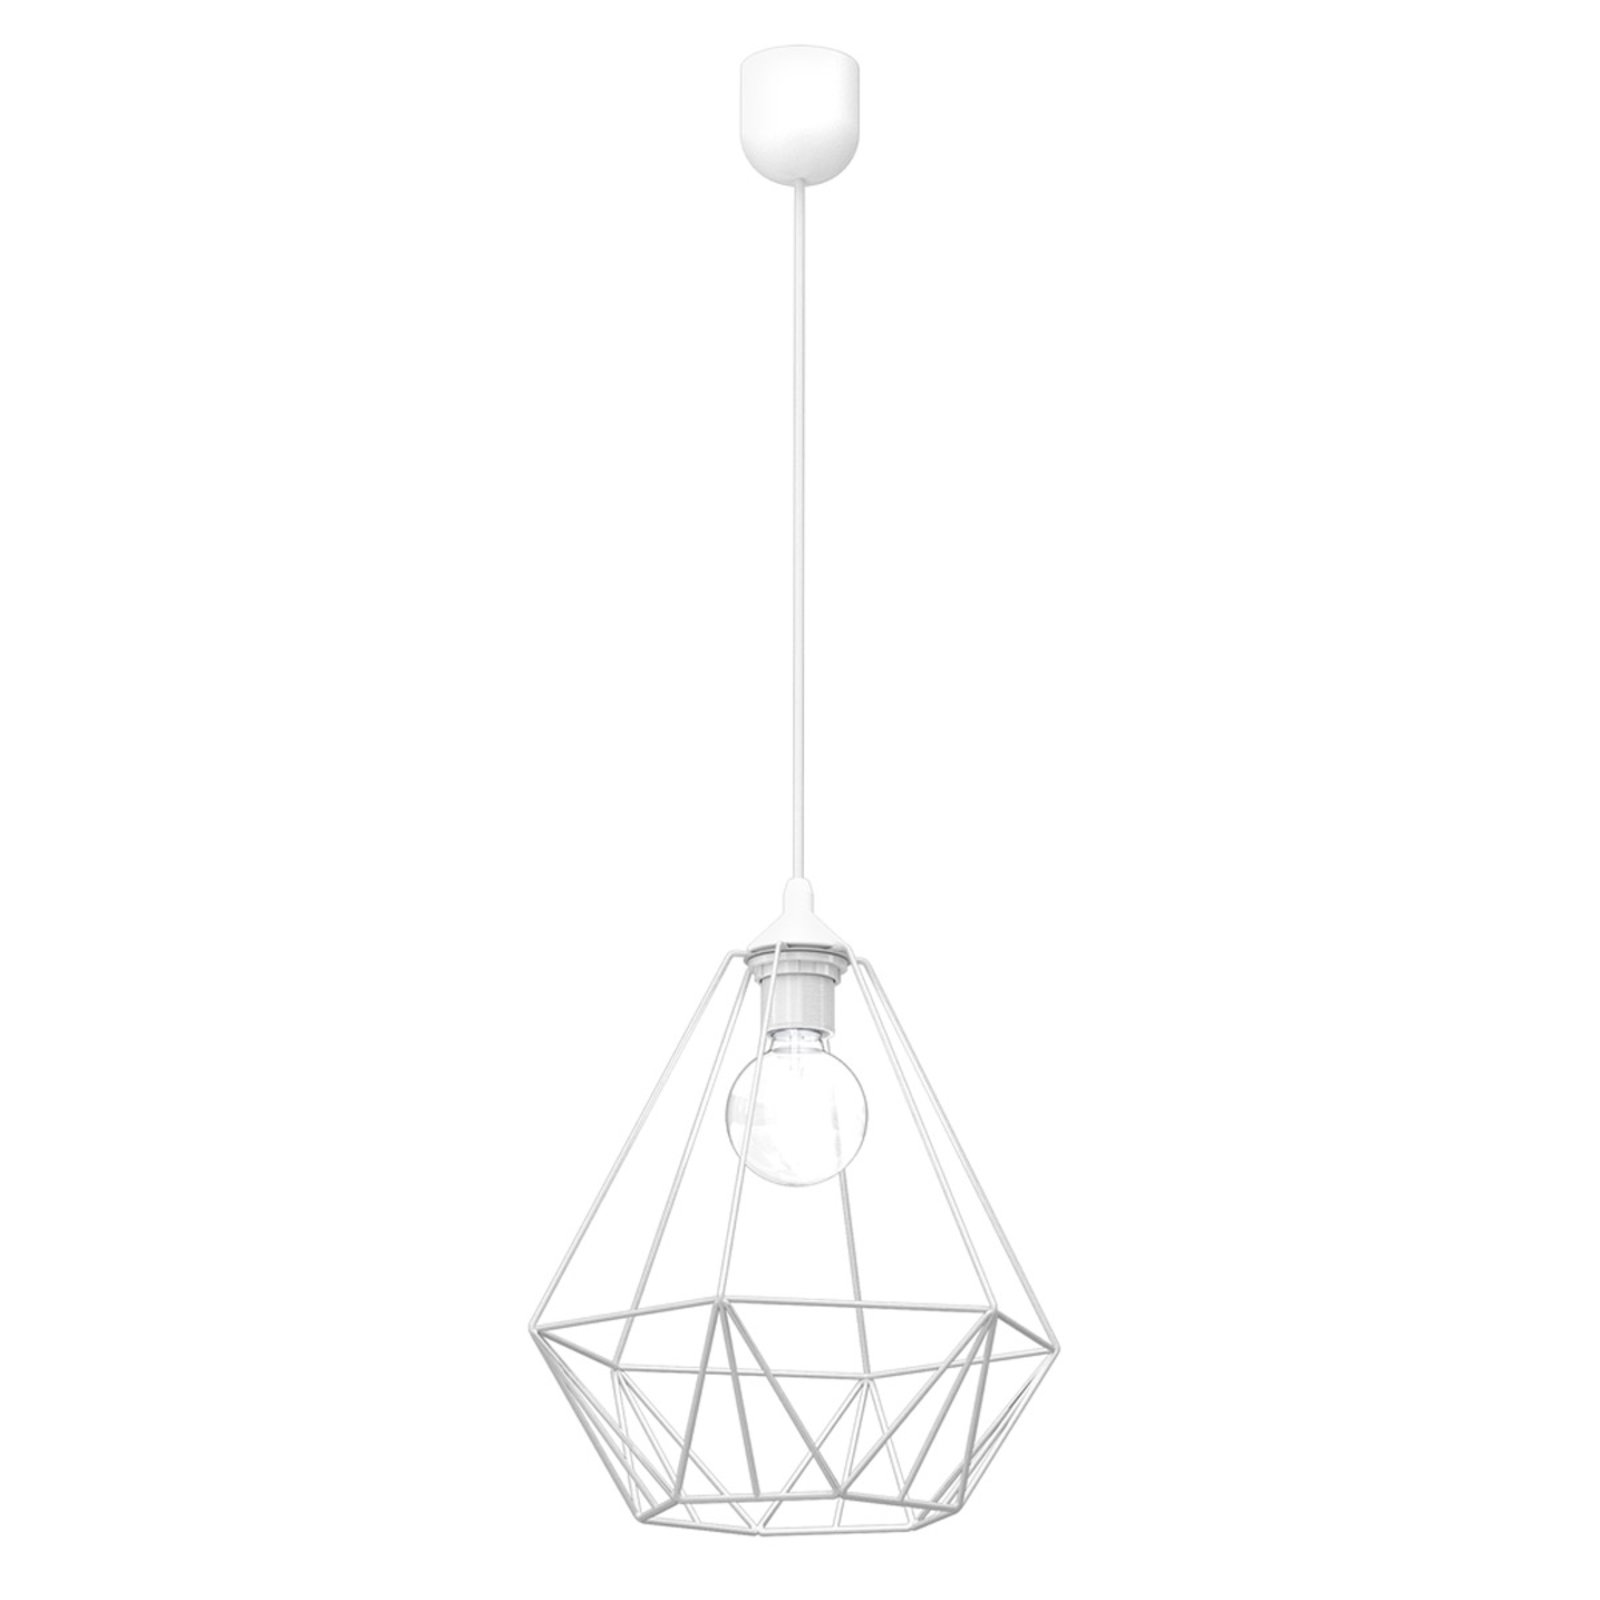 Basket hanging light, white, one-bulb